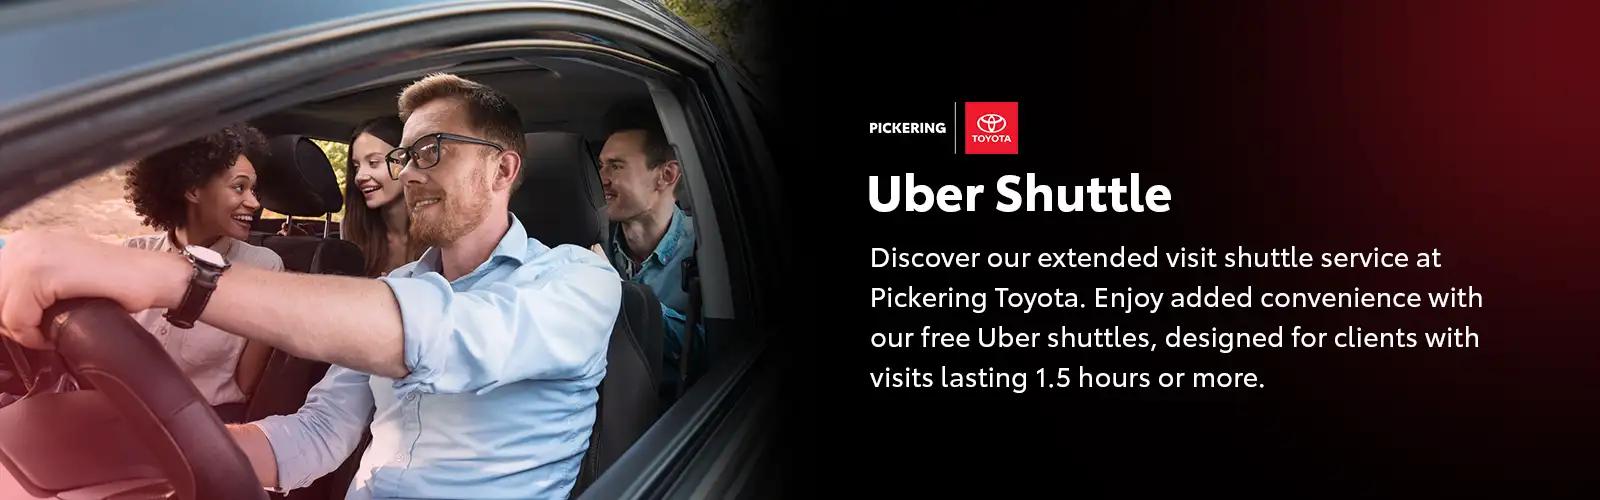 Pickering Toyota Uber Shuttle Service